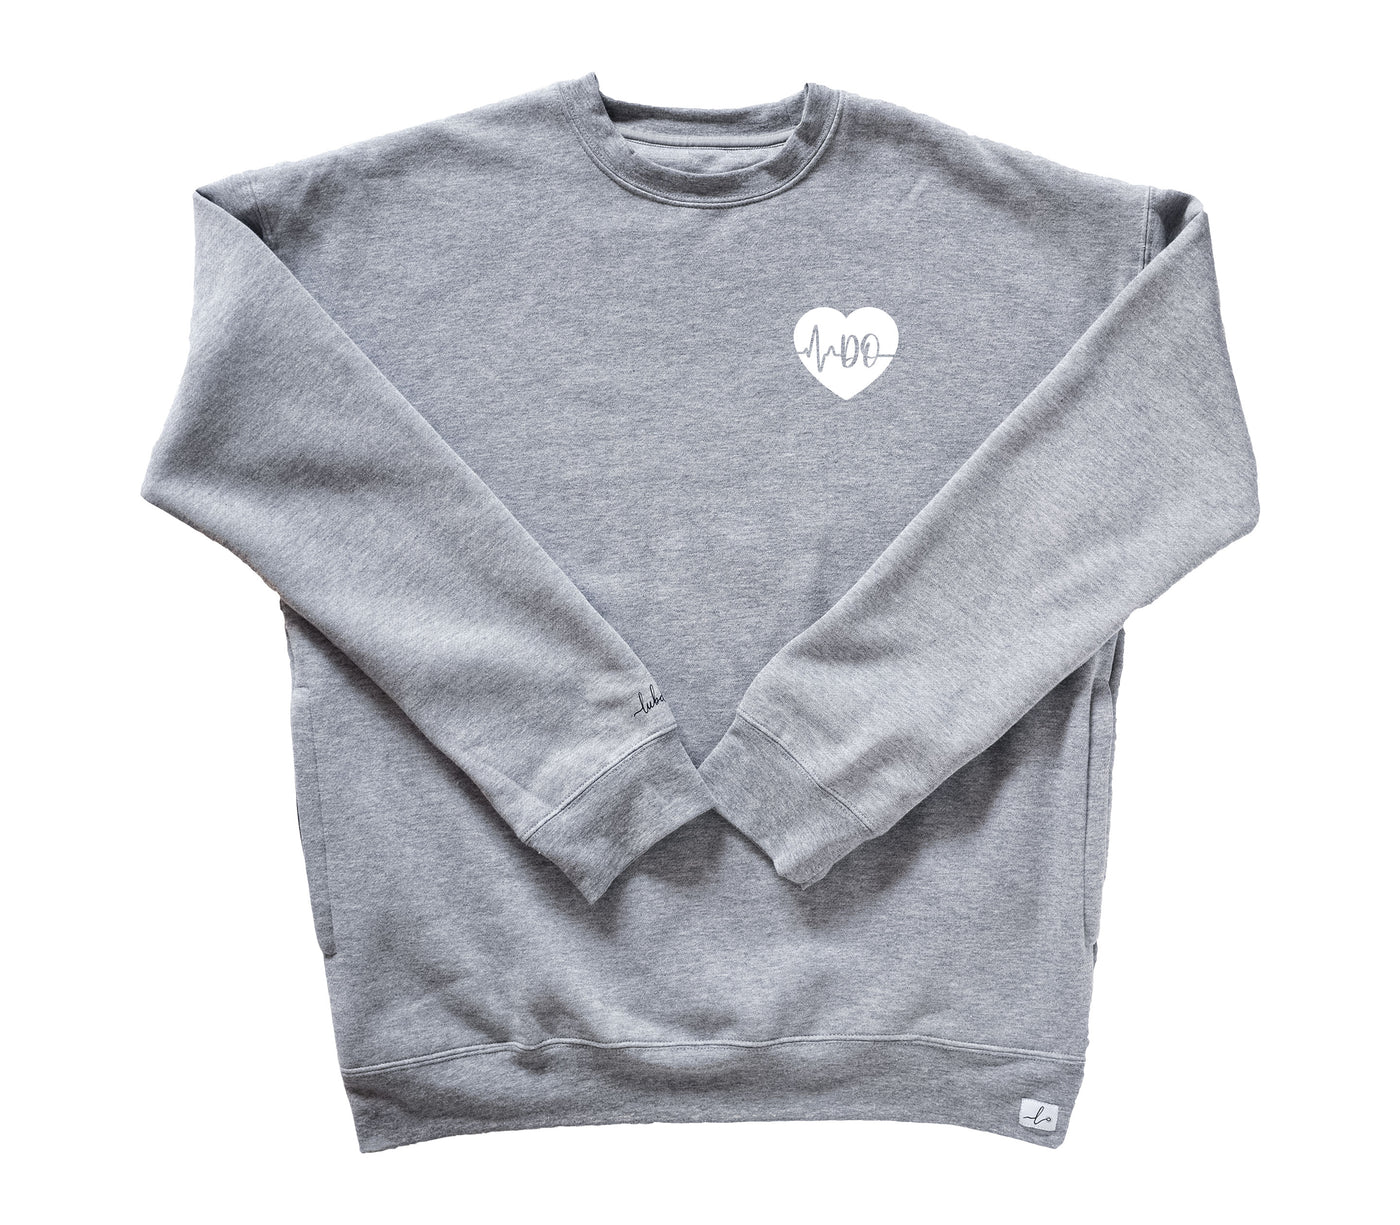 DO ECG Heart - Pocketed Crew Sweatshirt